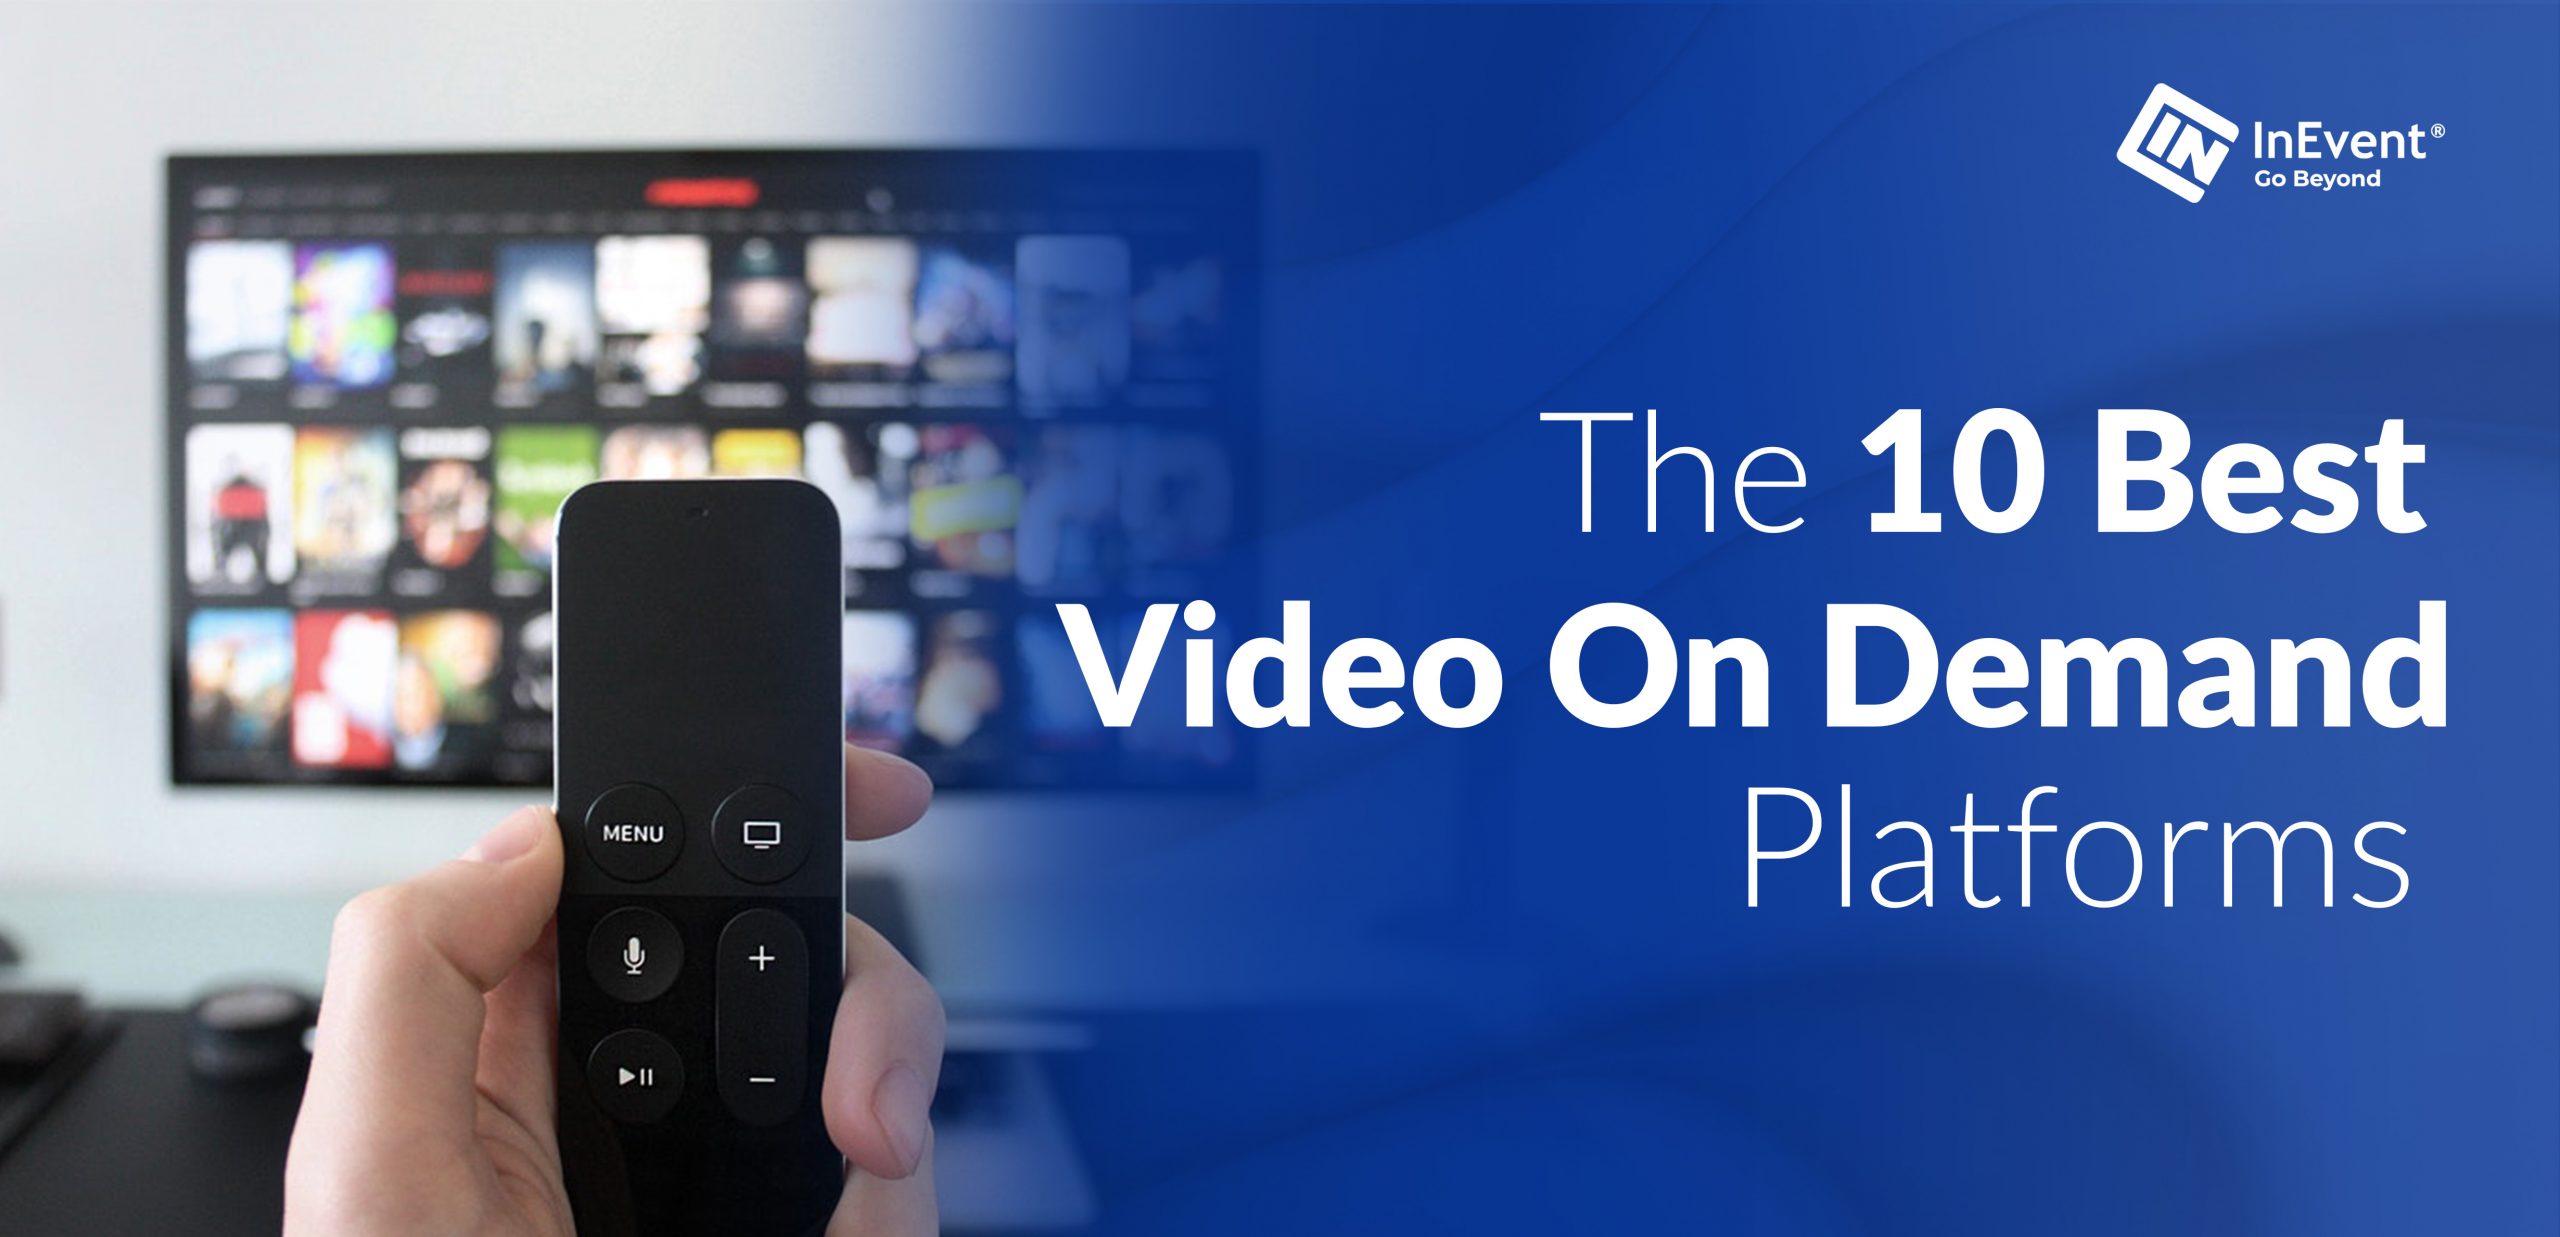 The 10 Best Video On Demand Platforms